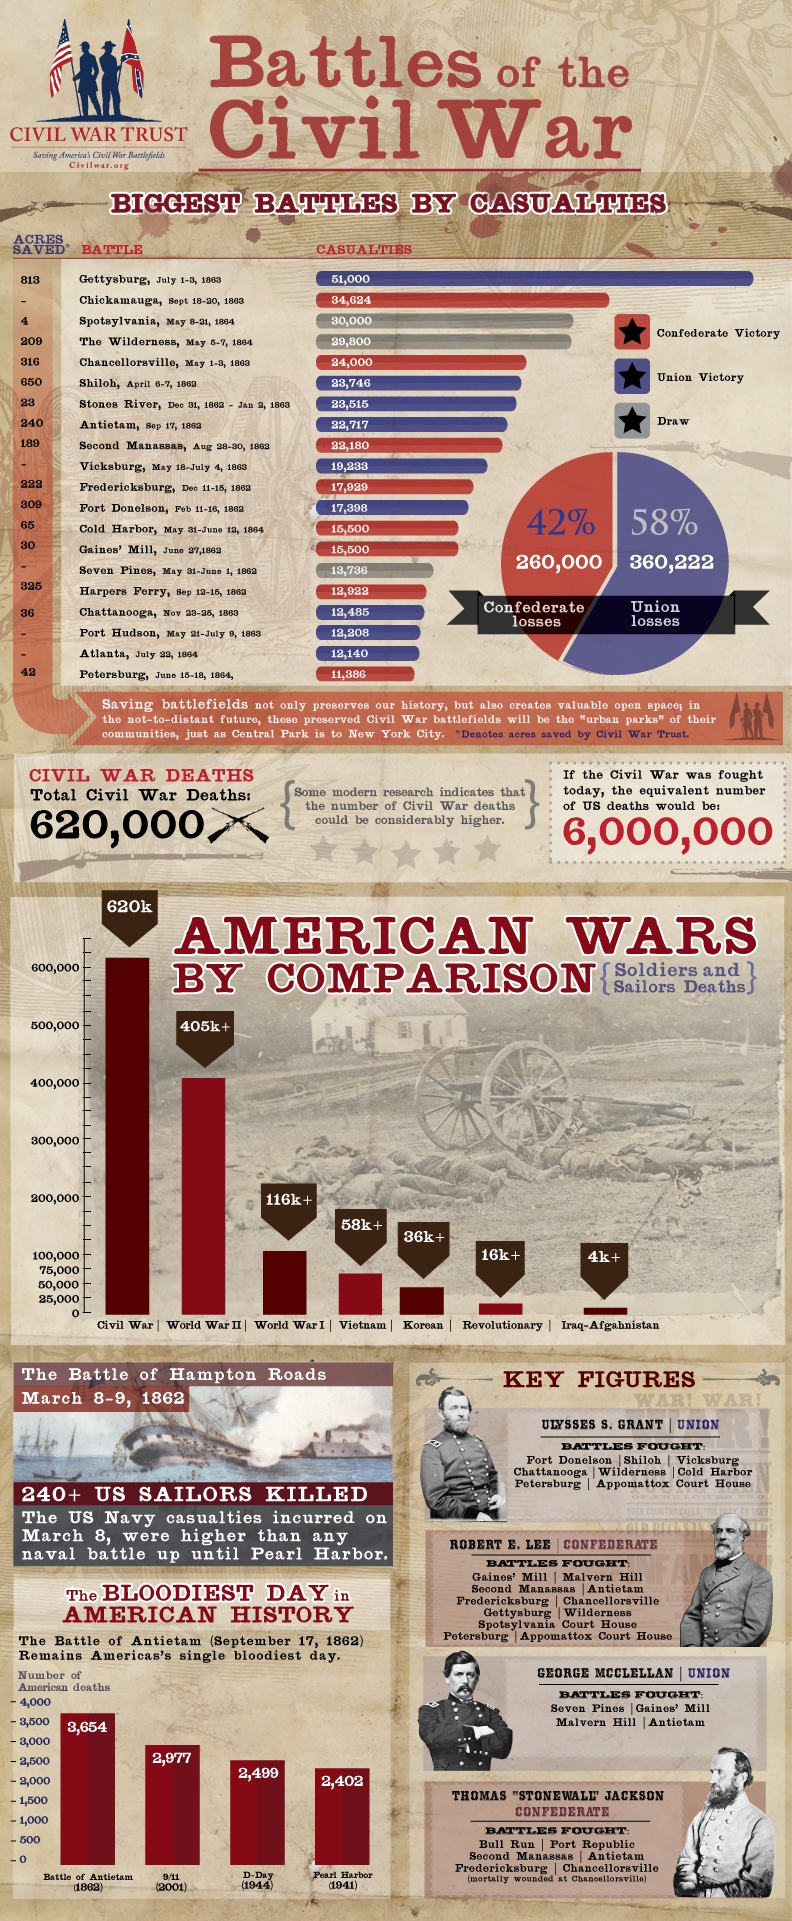 Civil War Casualties, Fatalities & Statistics.jpg